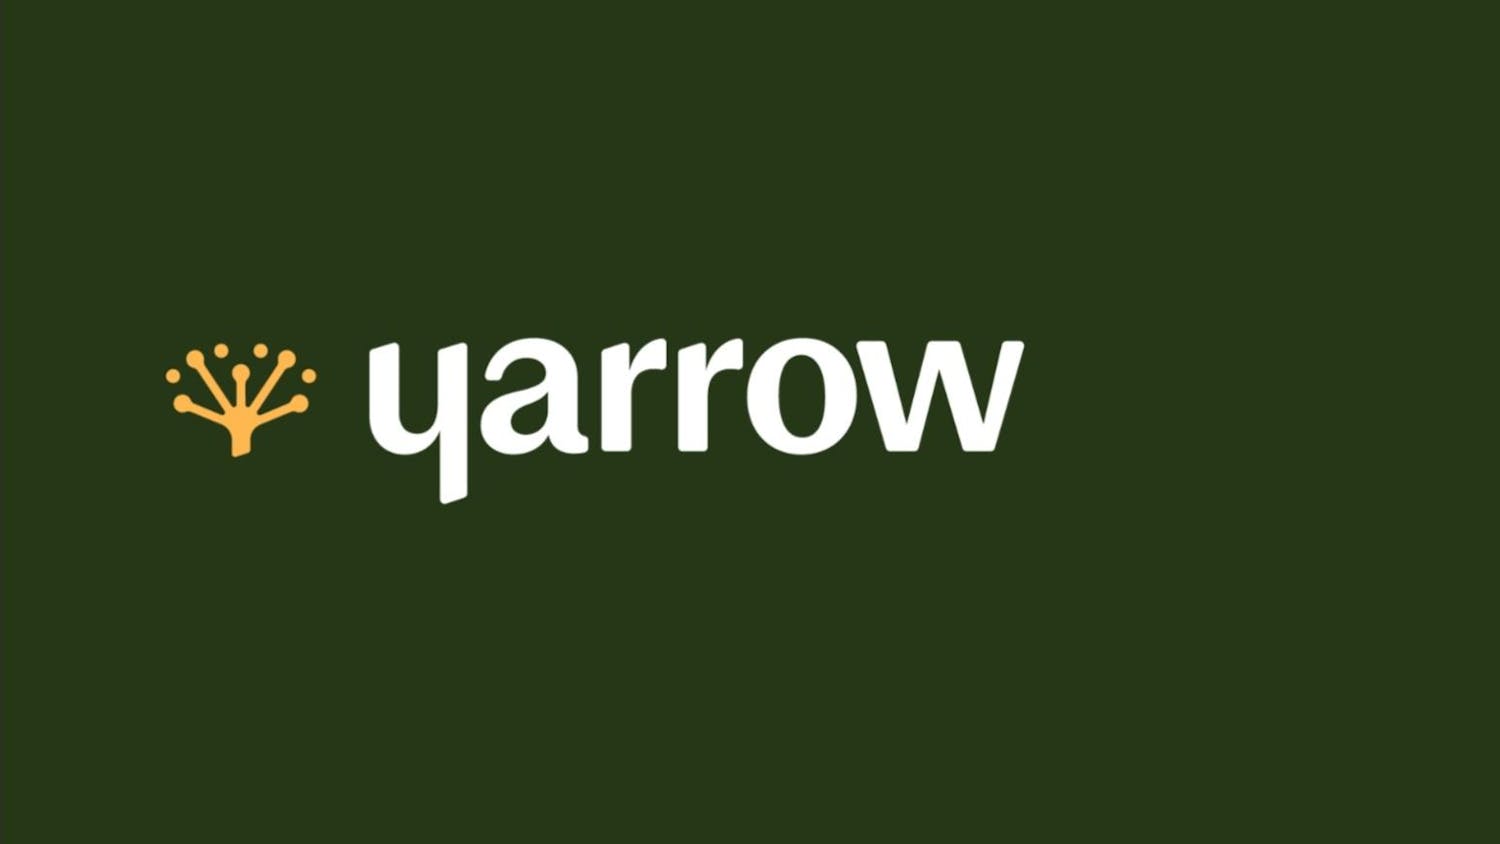 Yarrow logo